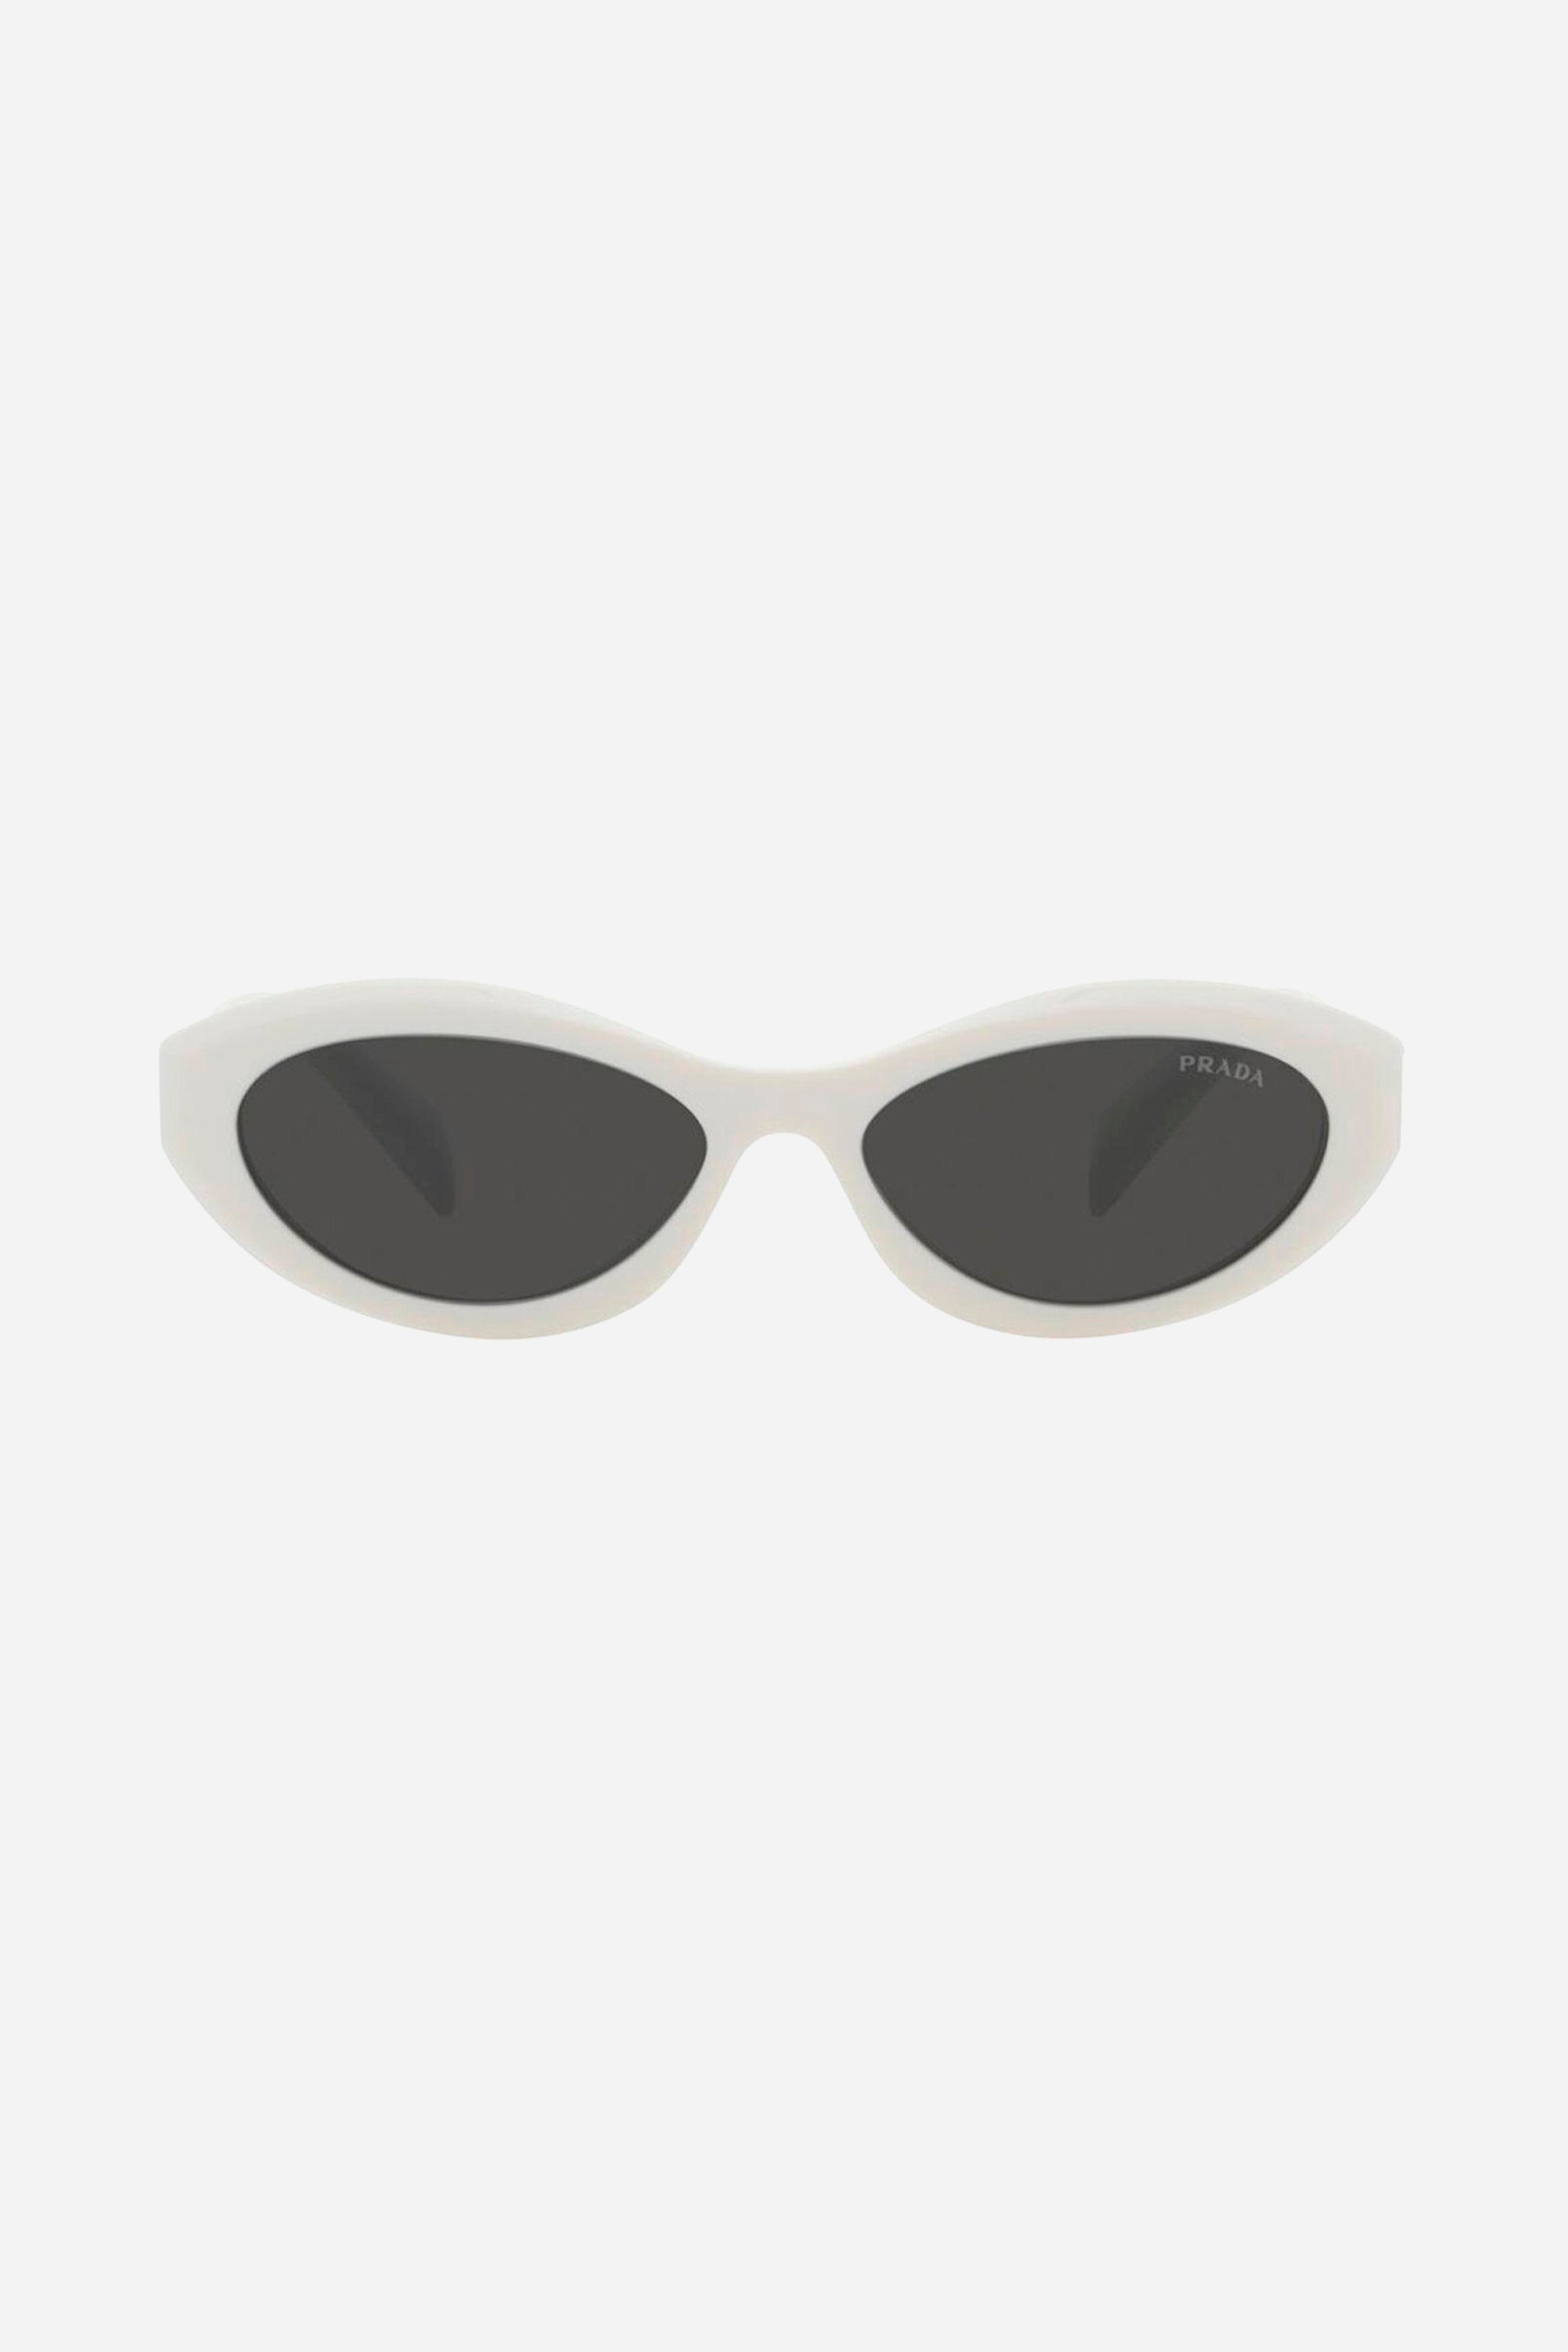 Prada PR26ZS white oval sunglasses - Eyewear Club